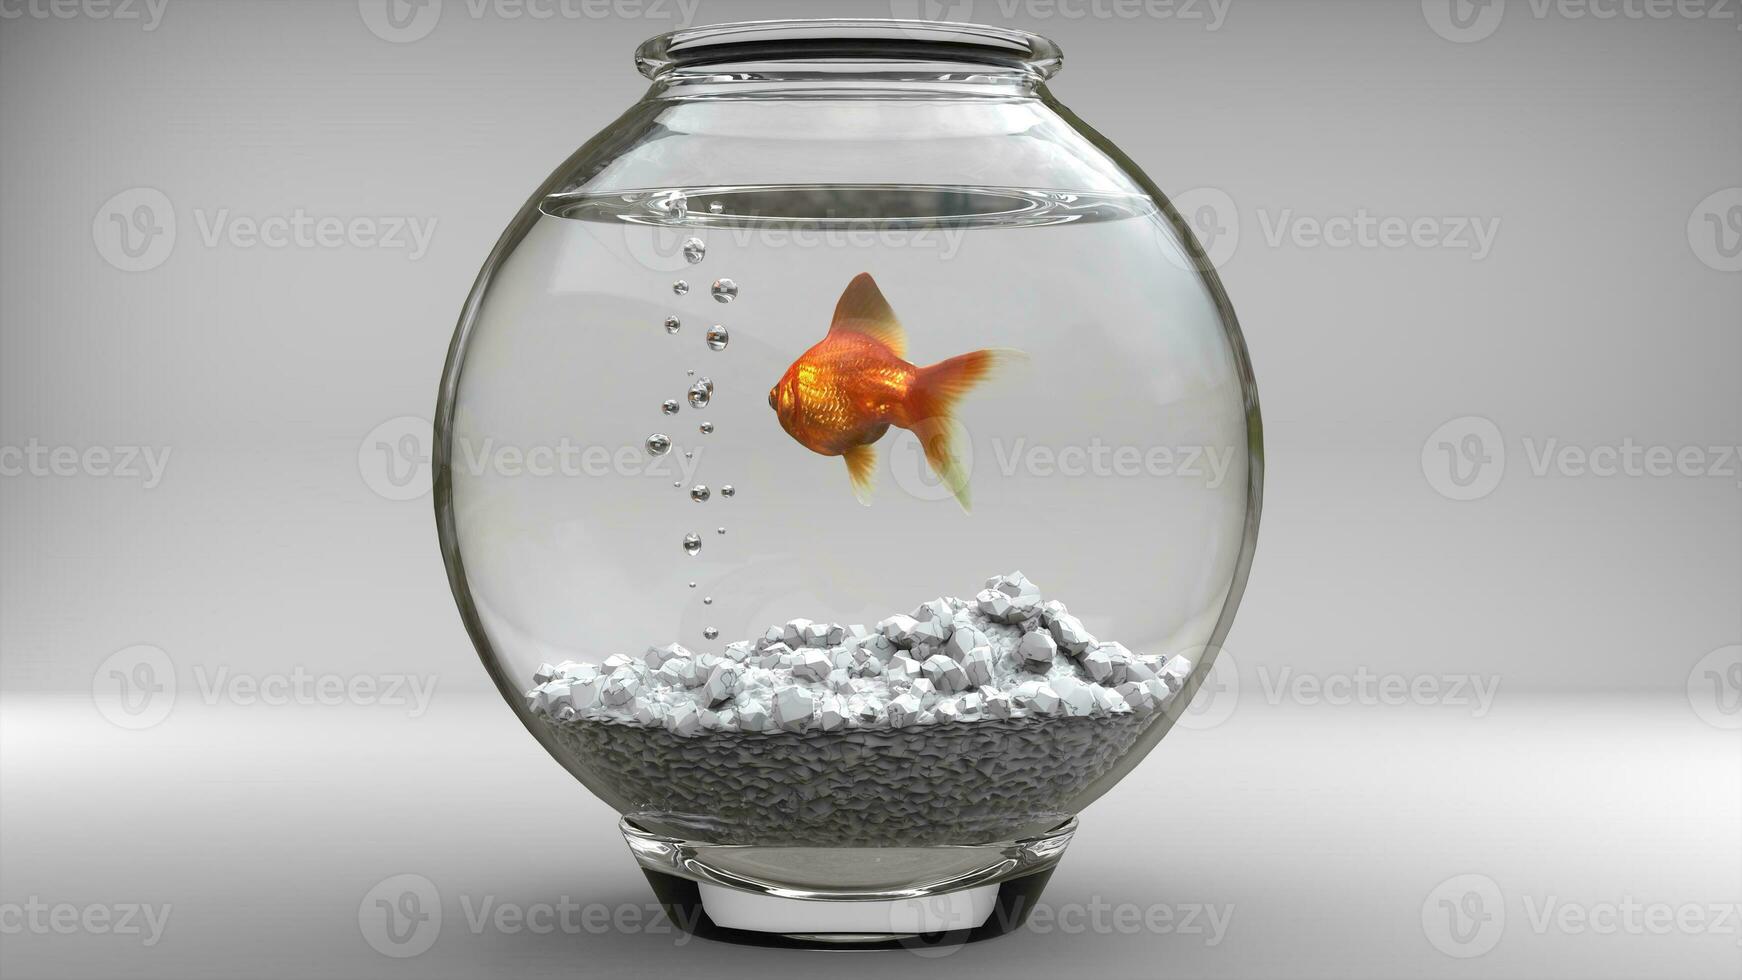 guld fisk i en fiskskål - bubblor - studio skott foto